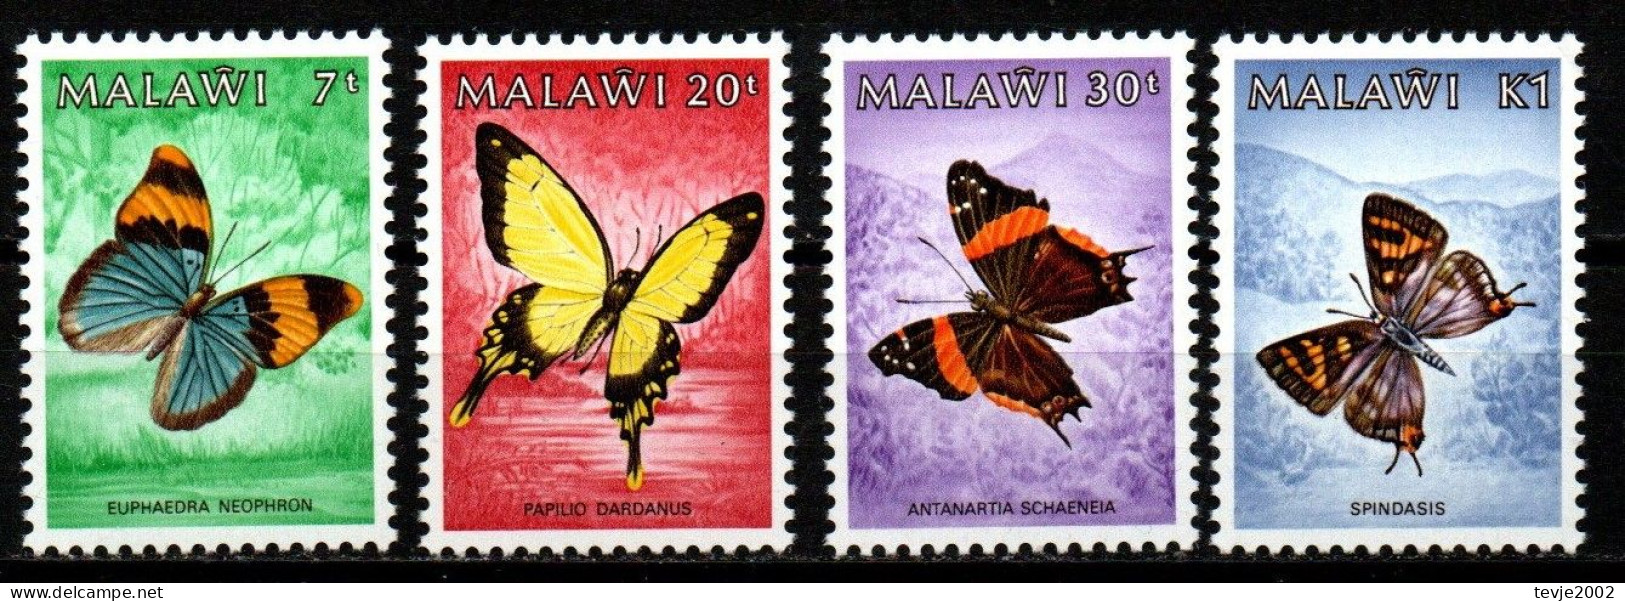 Malawi 1984 - Mi.Nr. 432 - 435 - Postfrisch MNH - Tiere Animals Schmetterlinge Butterflies - Butterflies